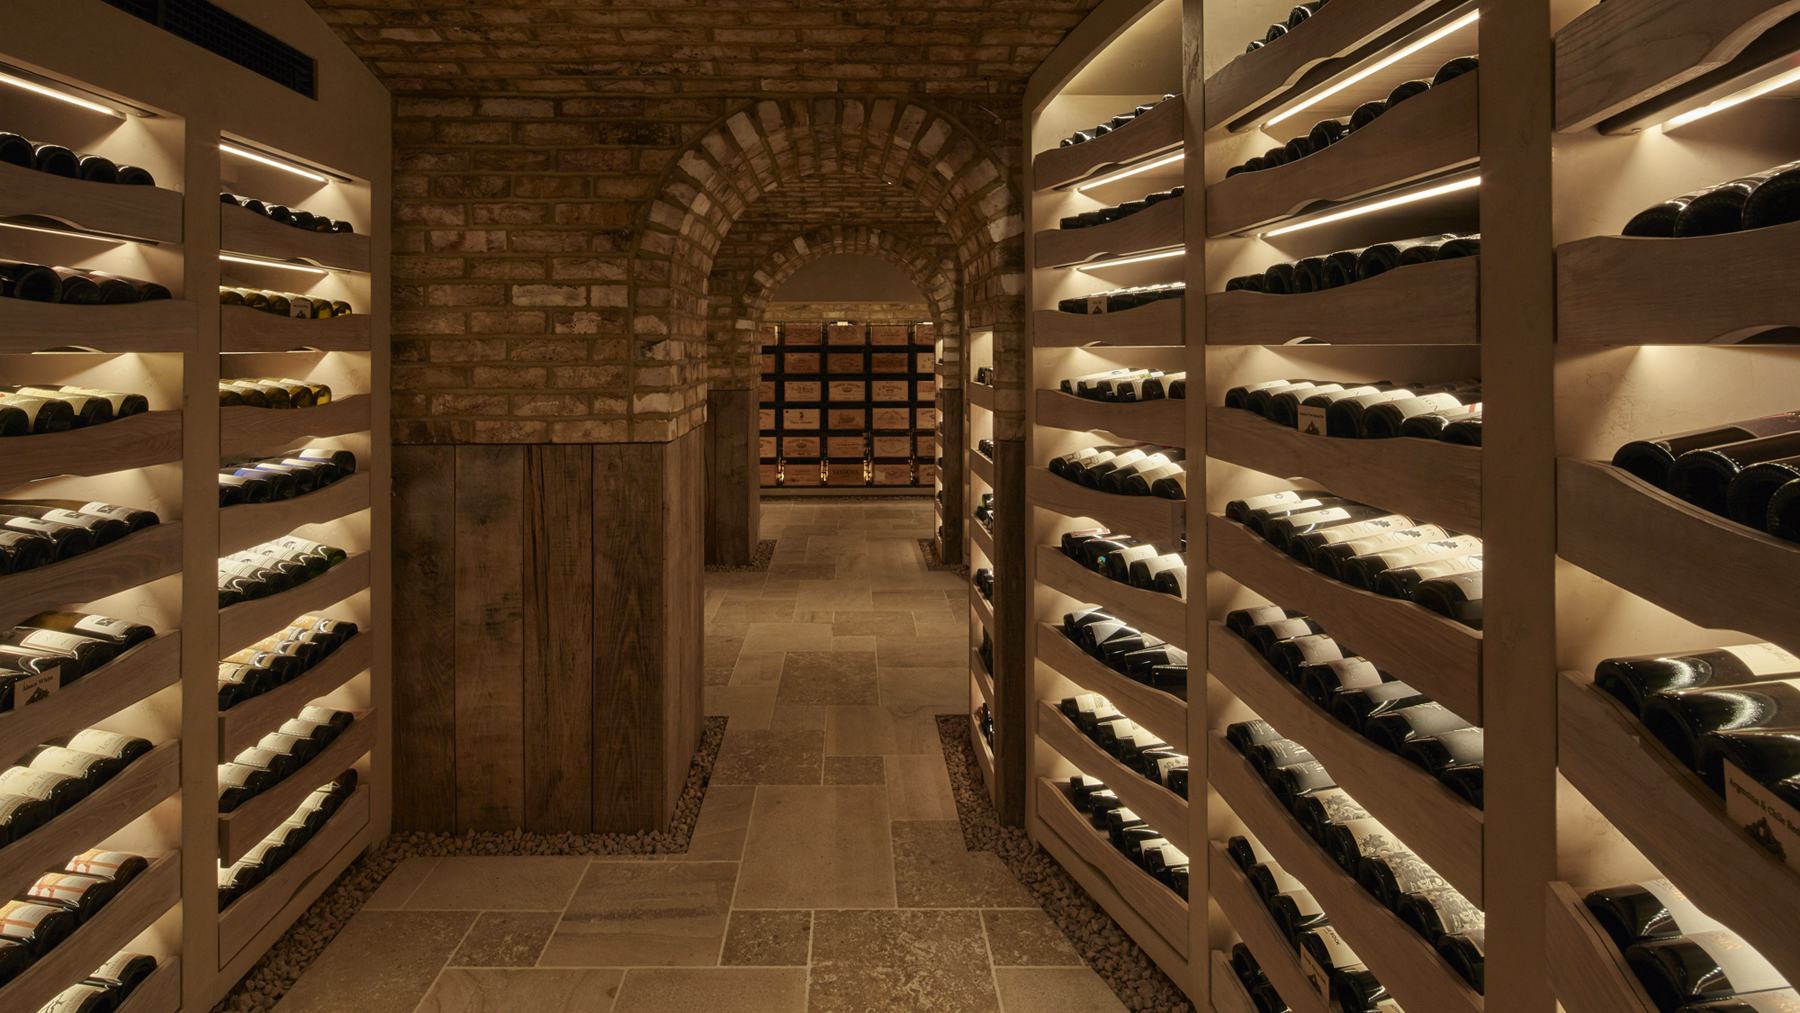 Hide Ollie Dabbous restaurants london venue hire wine cellar cool interiors